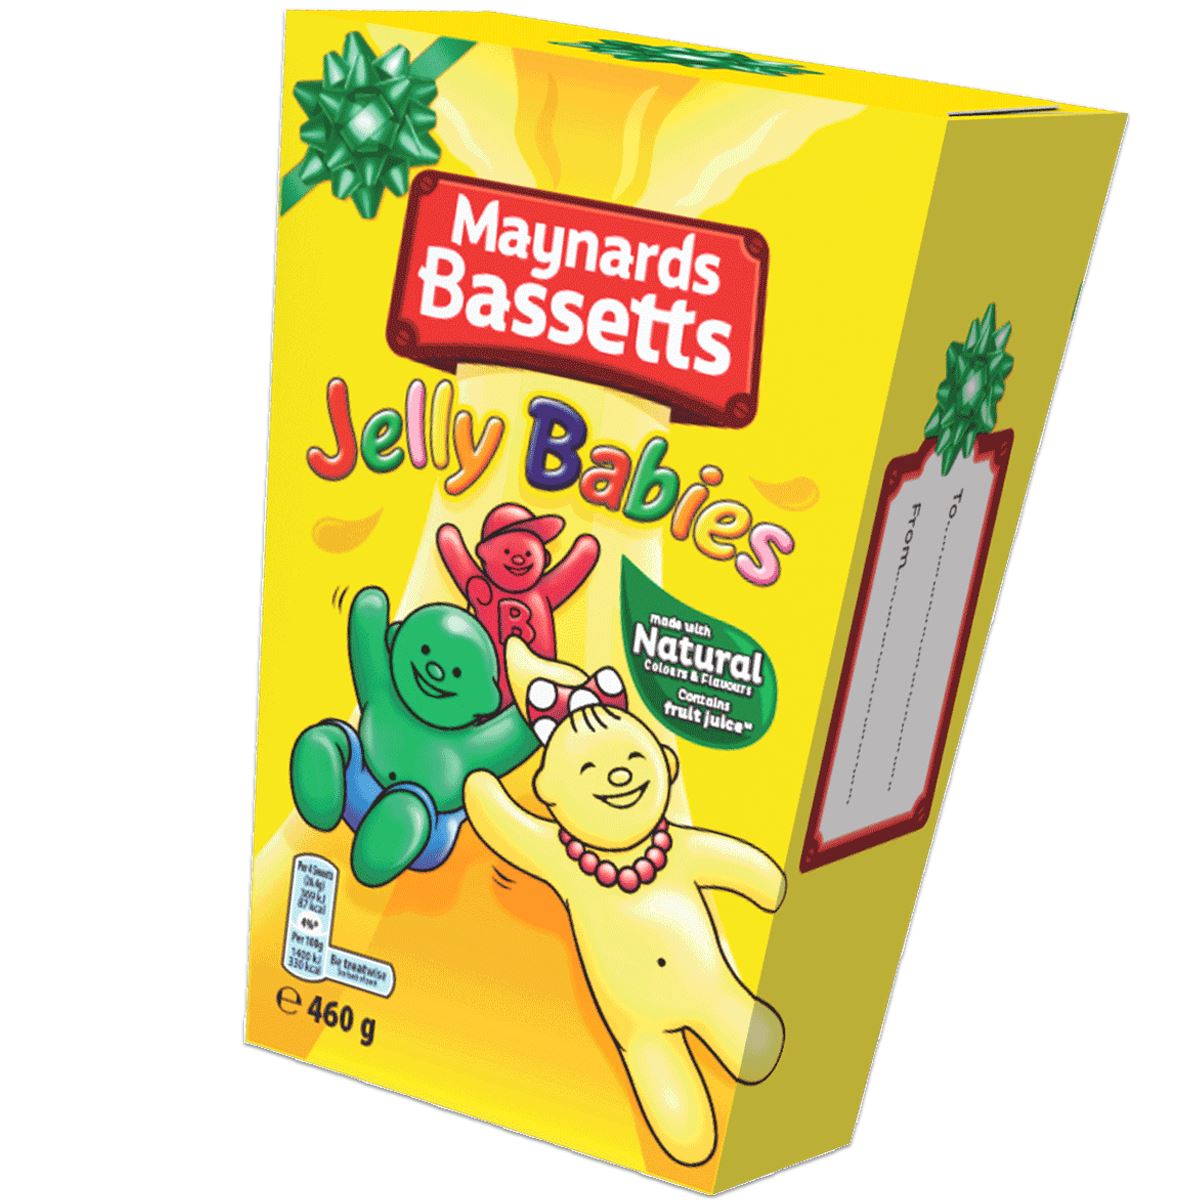 Maynards Bassets Jelly Babies Box 400g